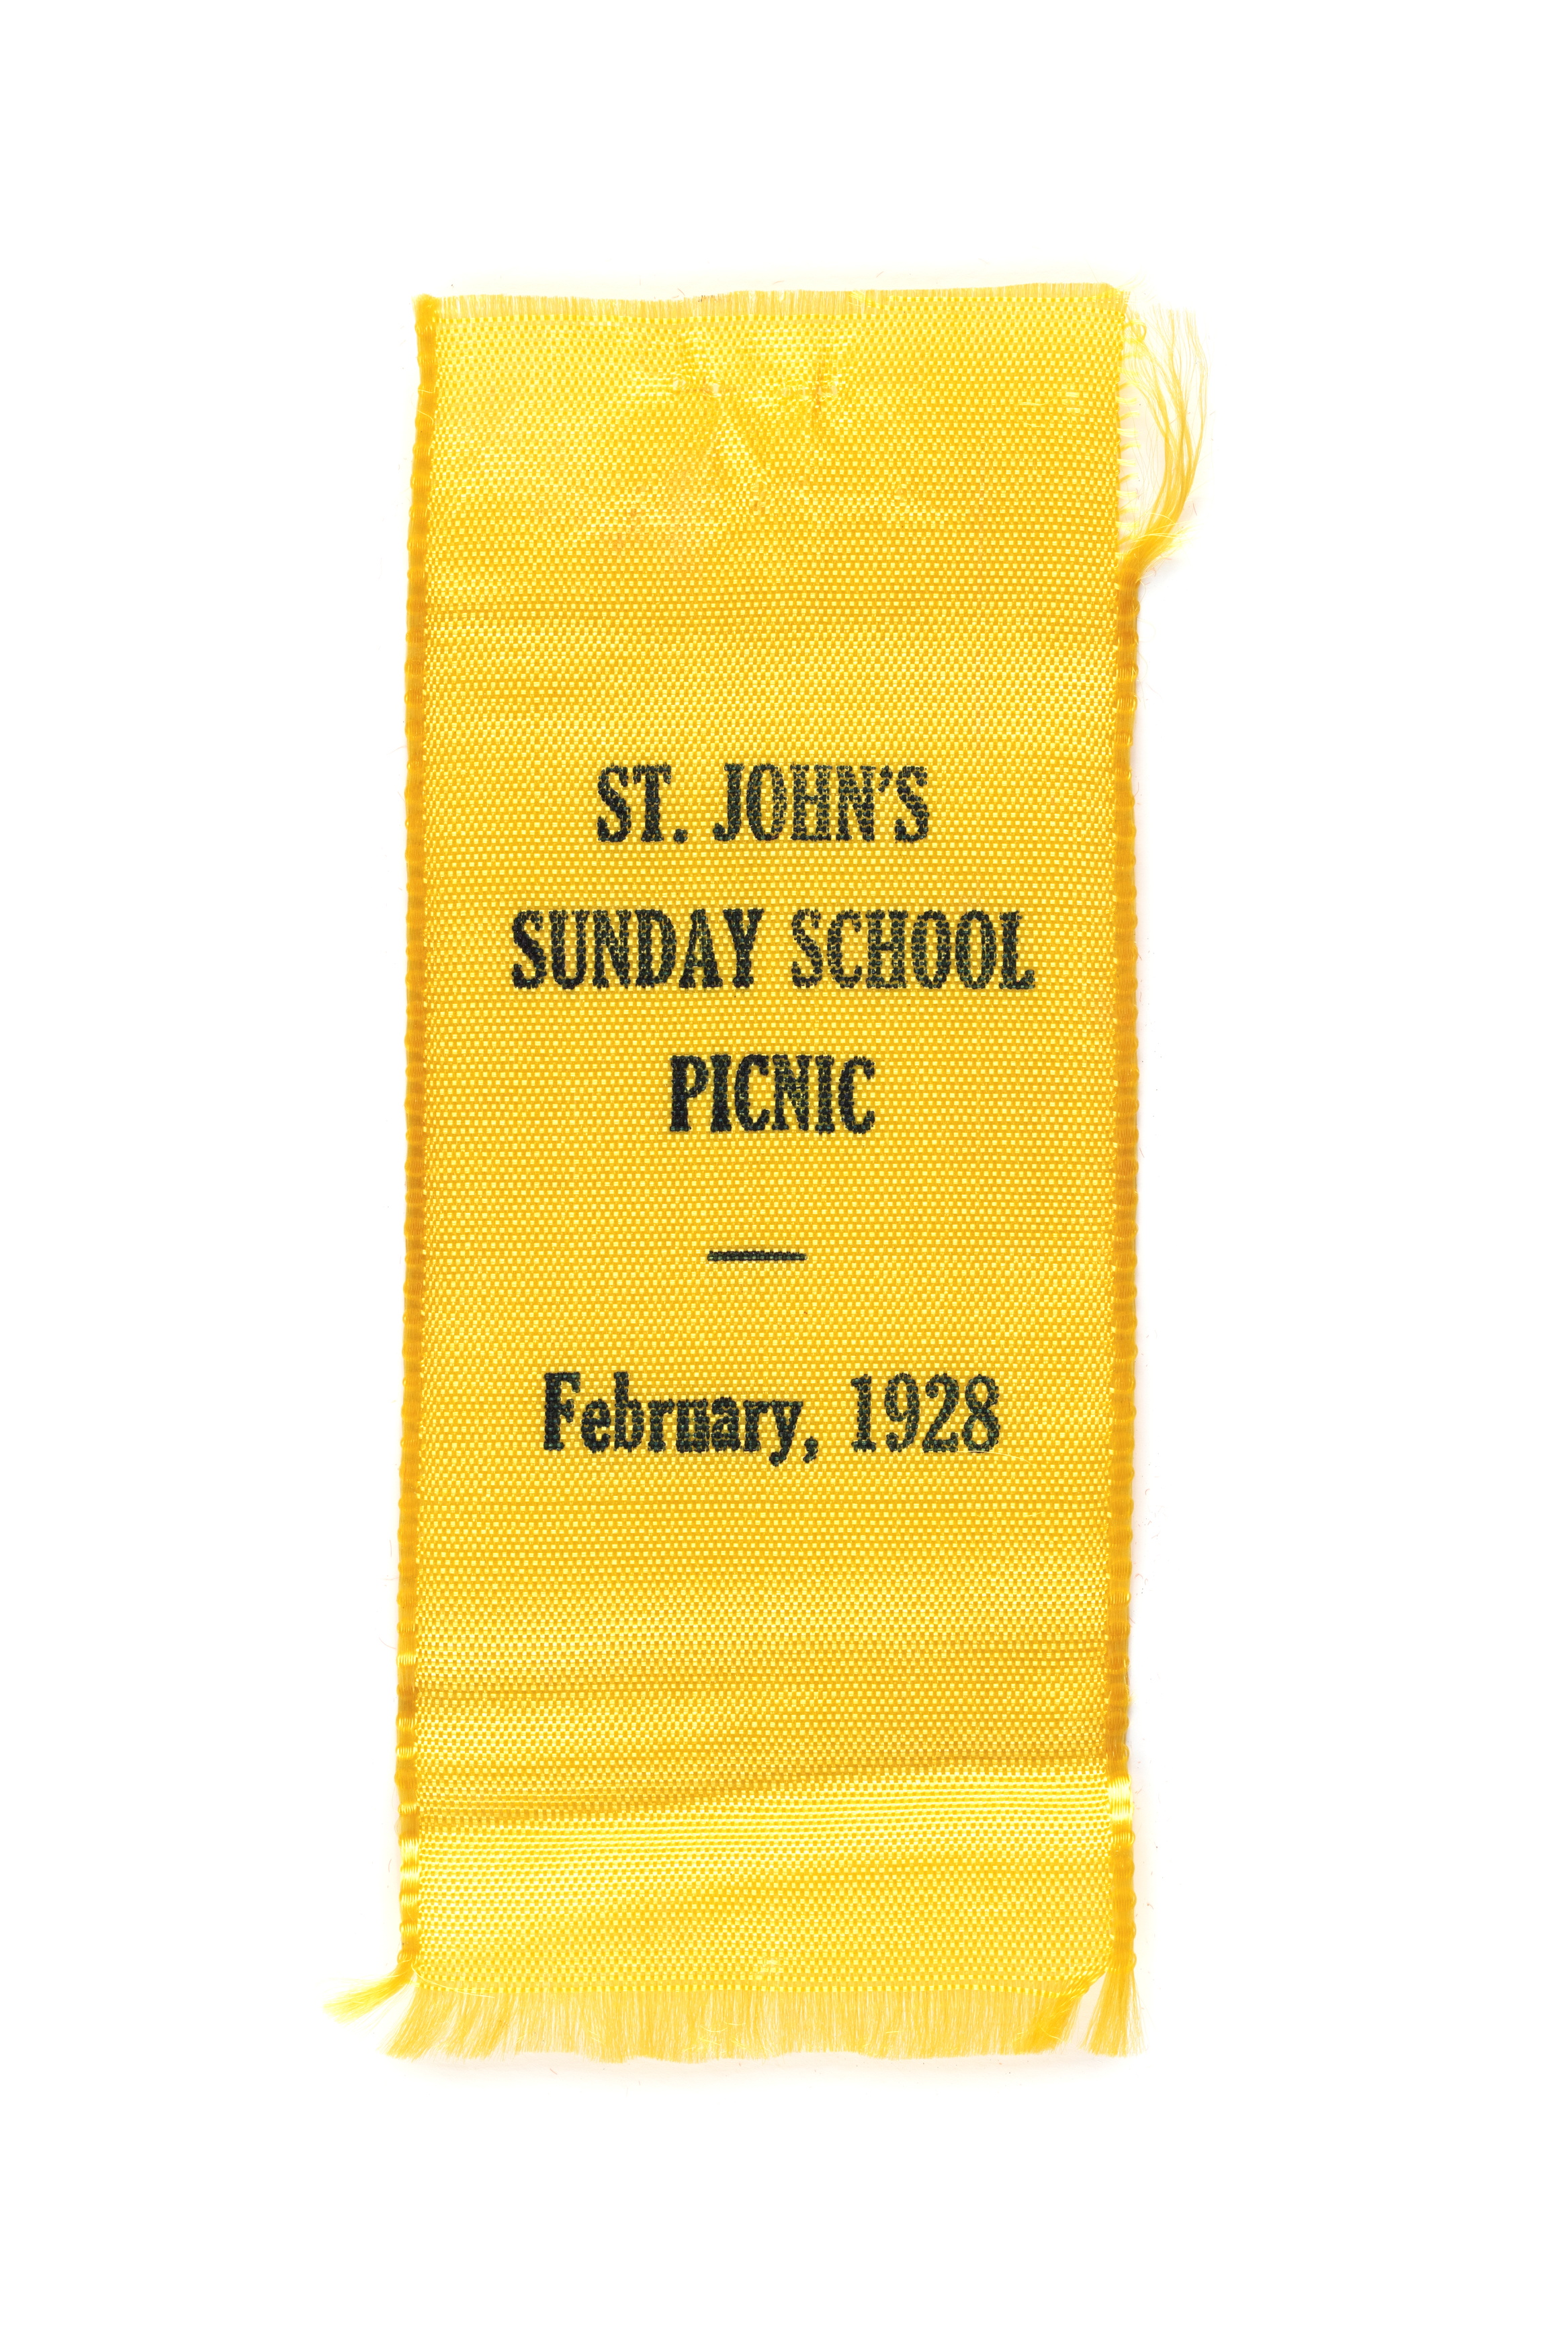 Ribbon commemorating St Johns Church Sunday School Picnic